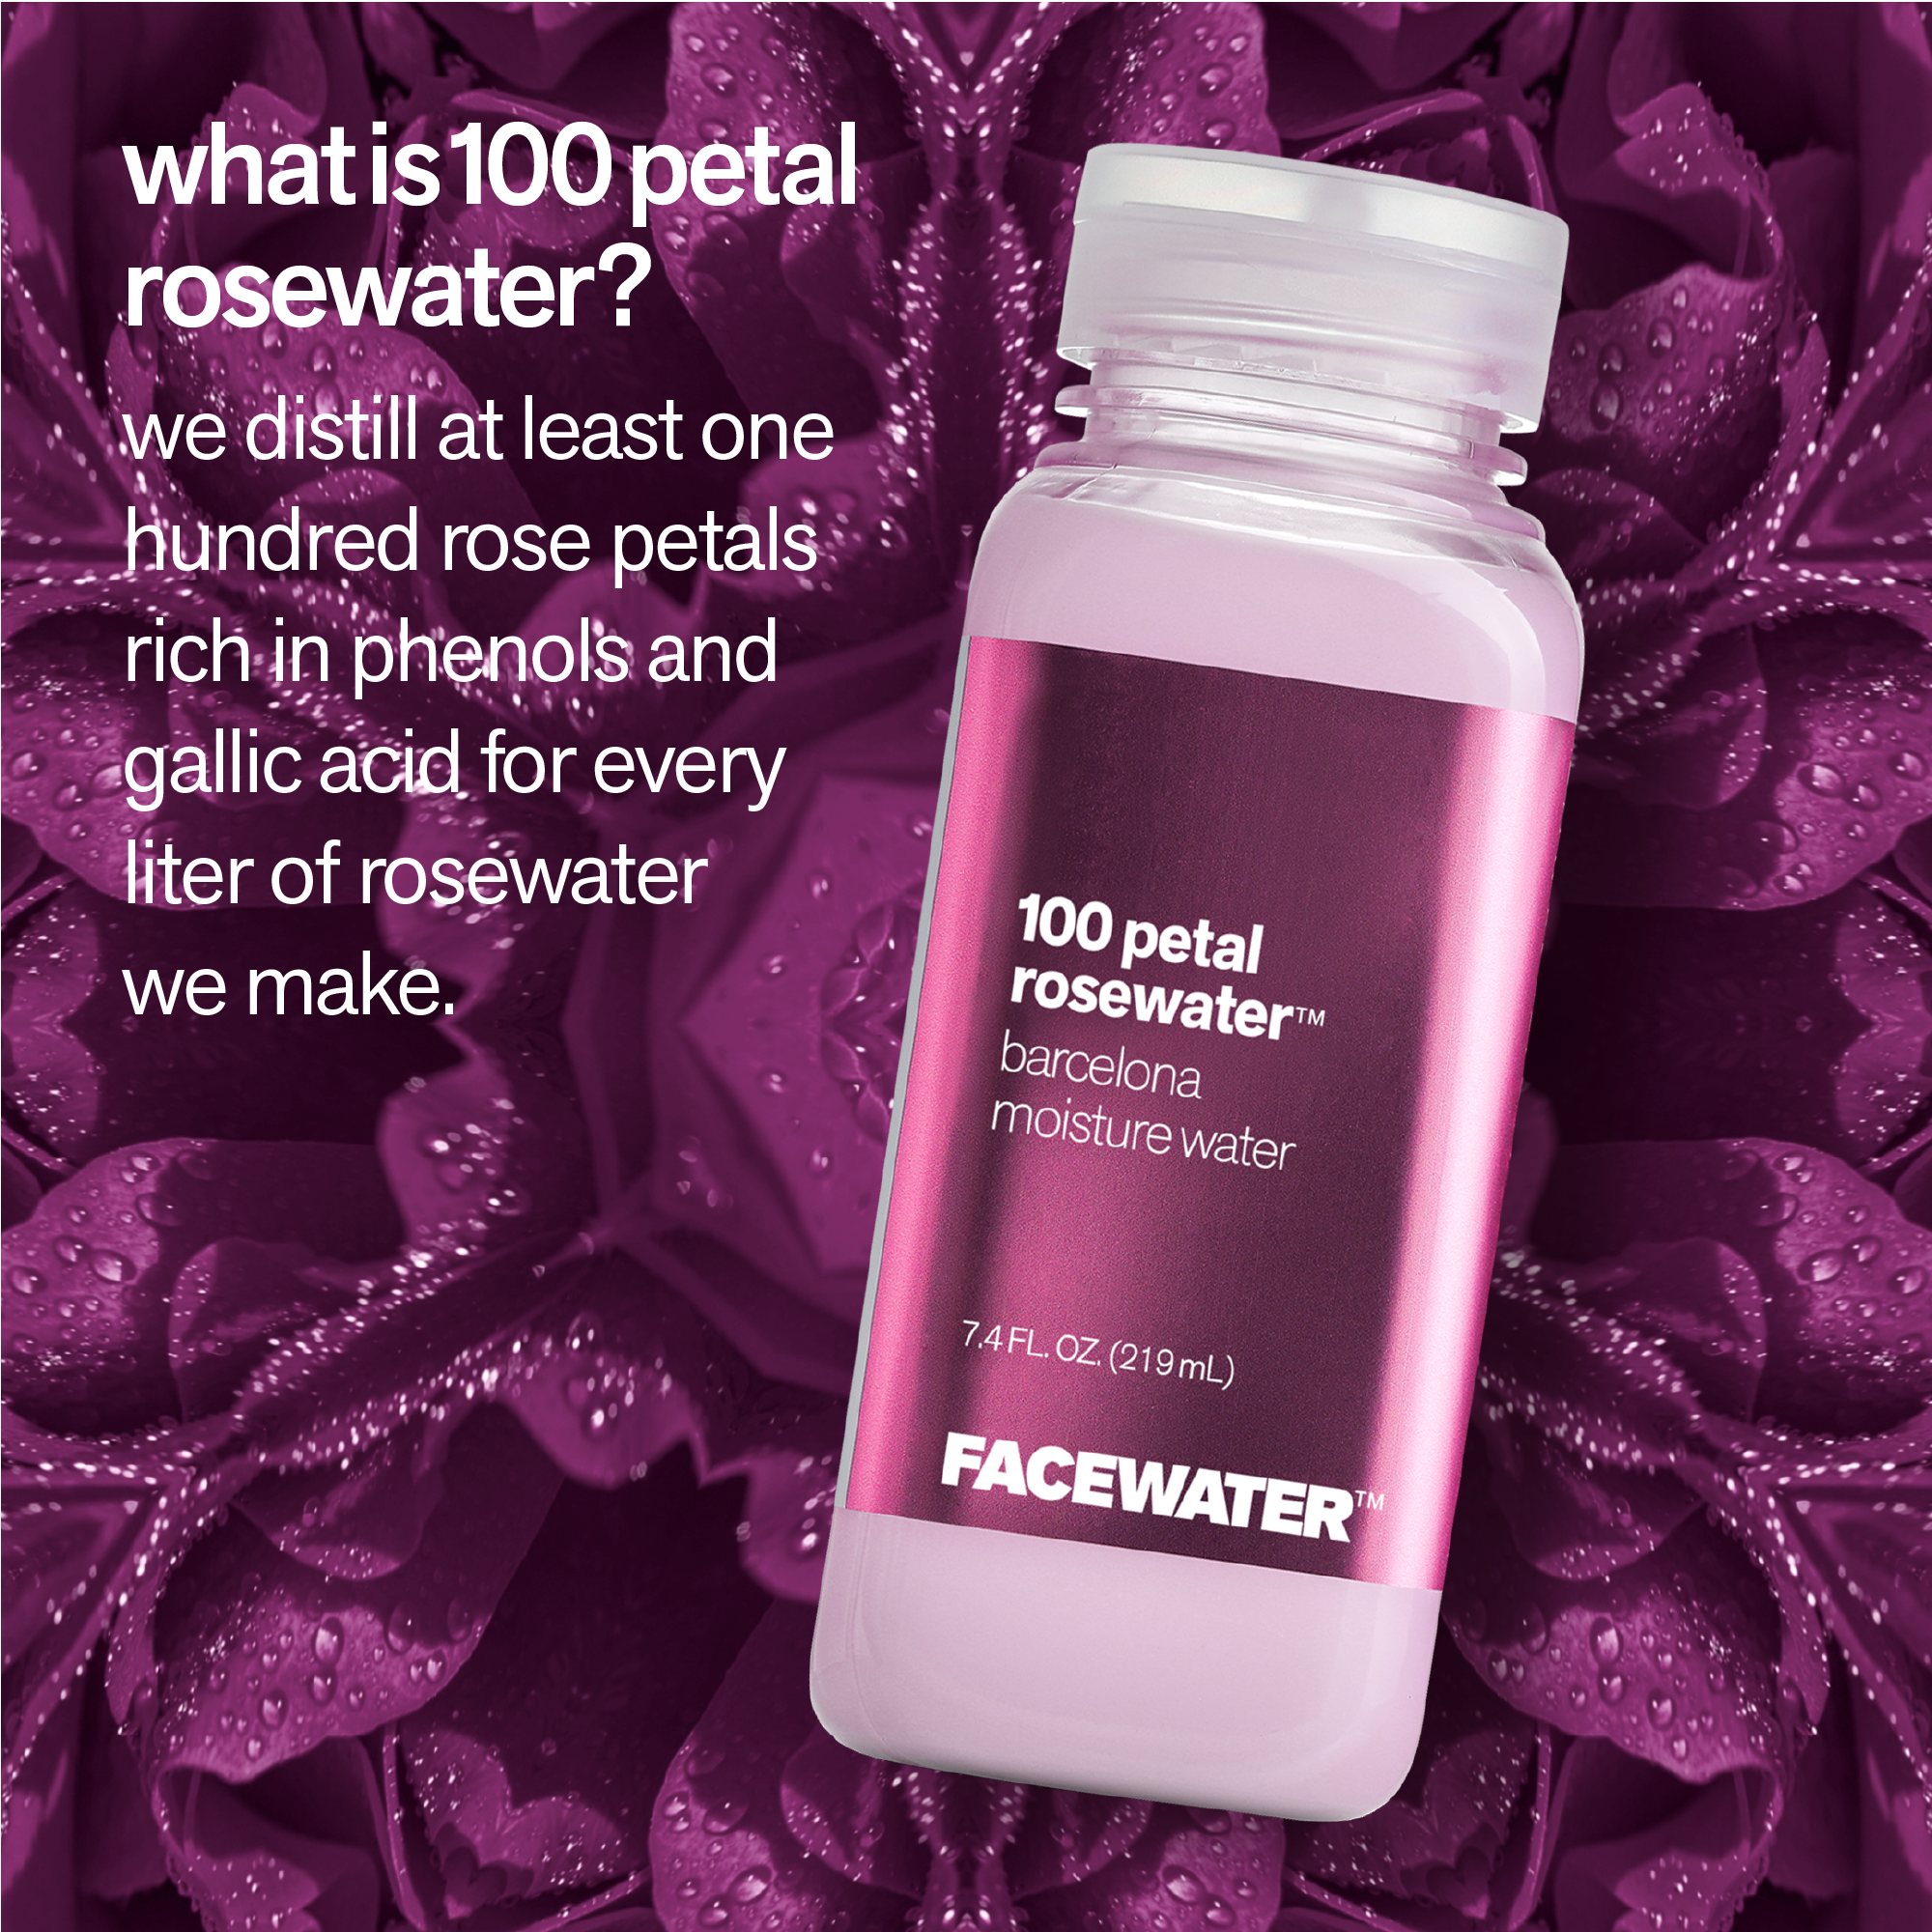 100 Petal Rosewater Barcelona Moisture Water